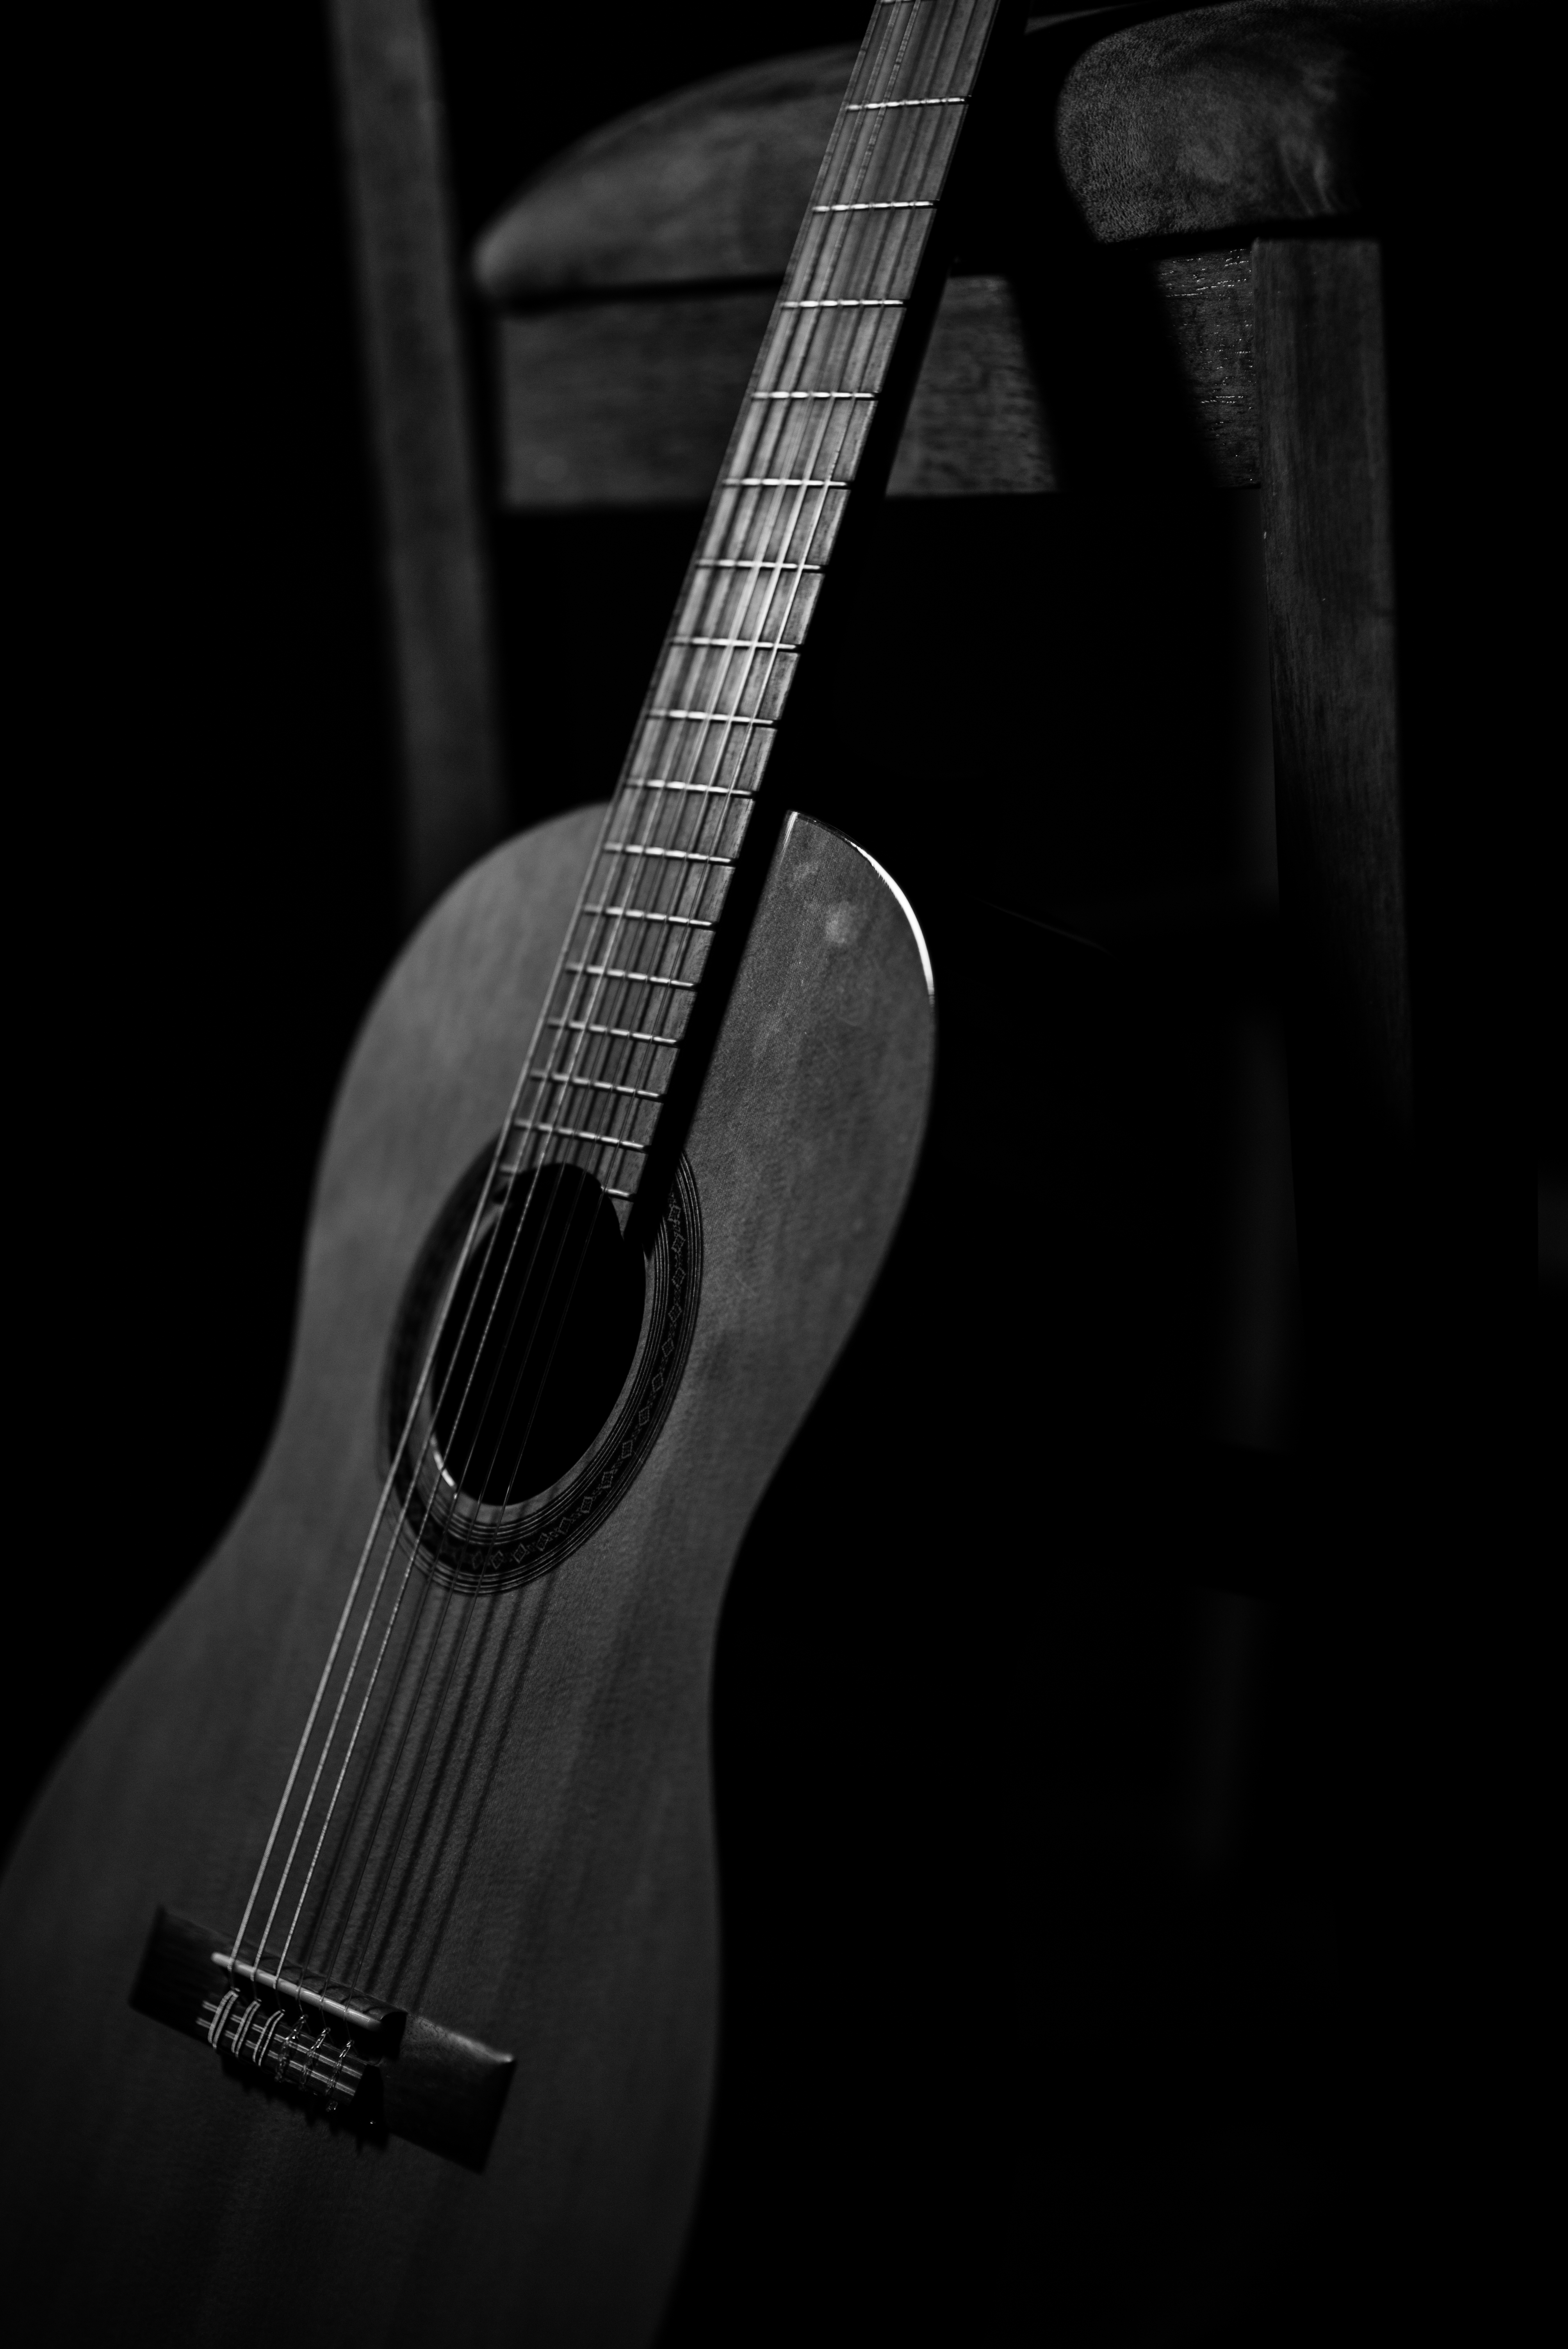 guitar, musical instrument, music, bw, dark, chb High Definition image